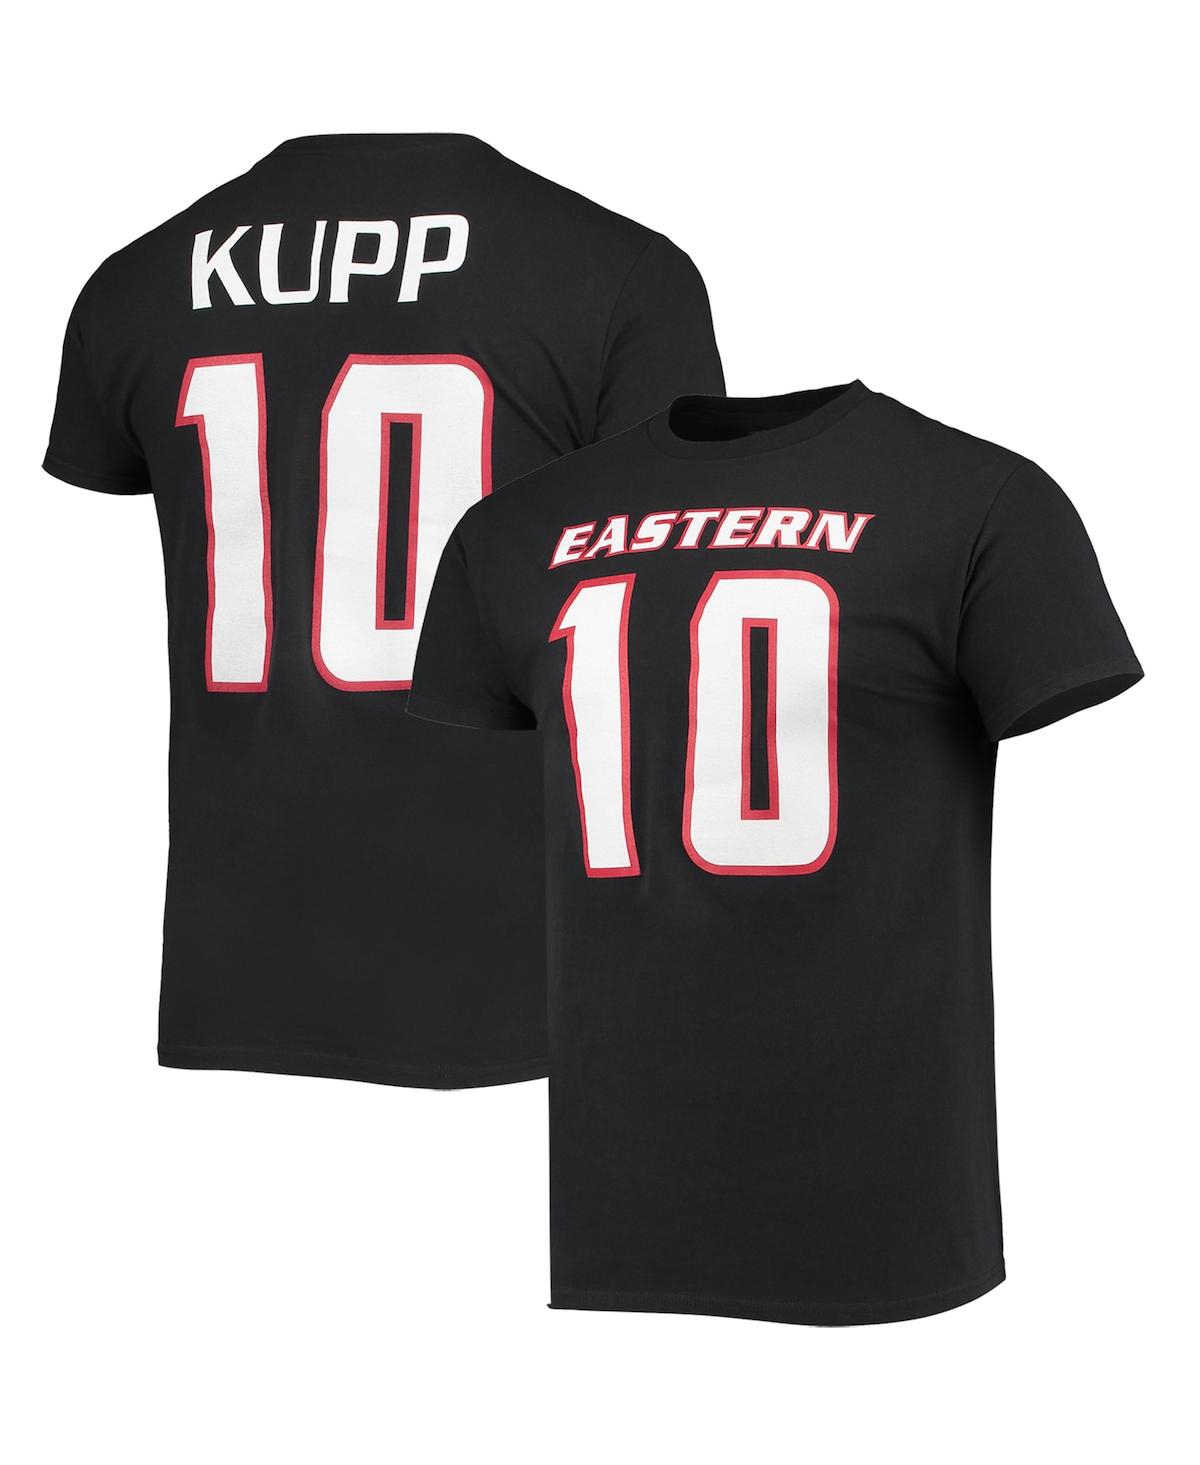 Men's Original Retro Brand Cooper Kupp Black Eastern Washington Eagles Player T-shirt - Black